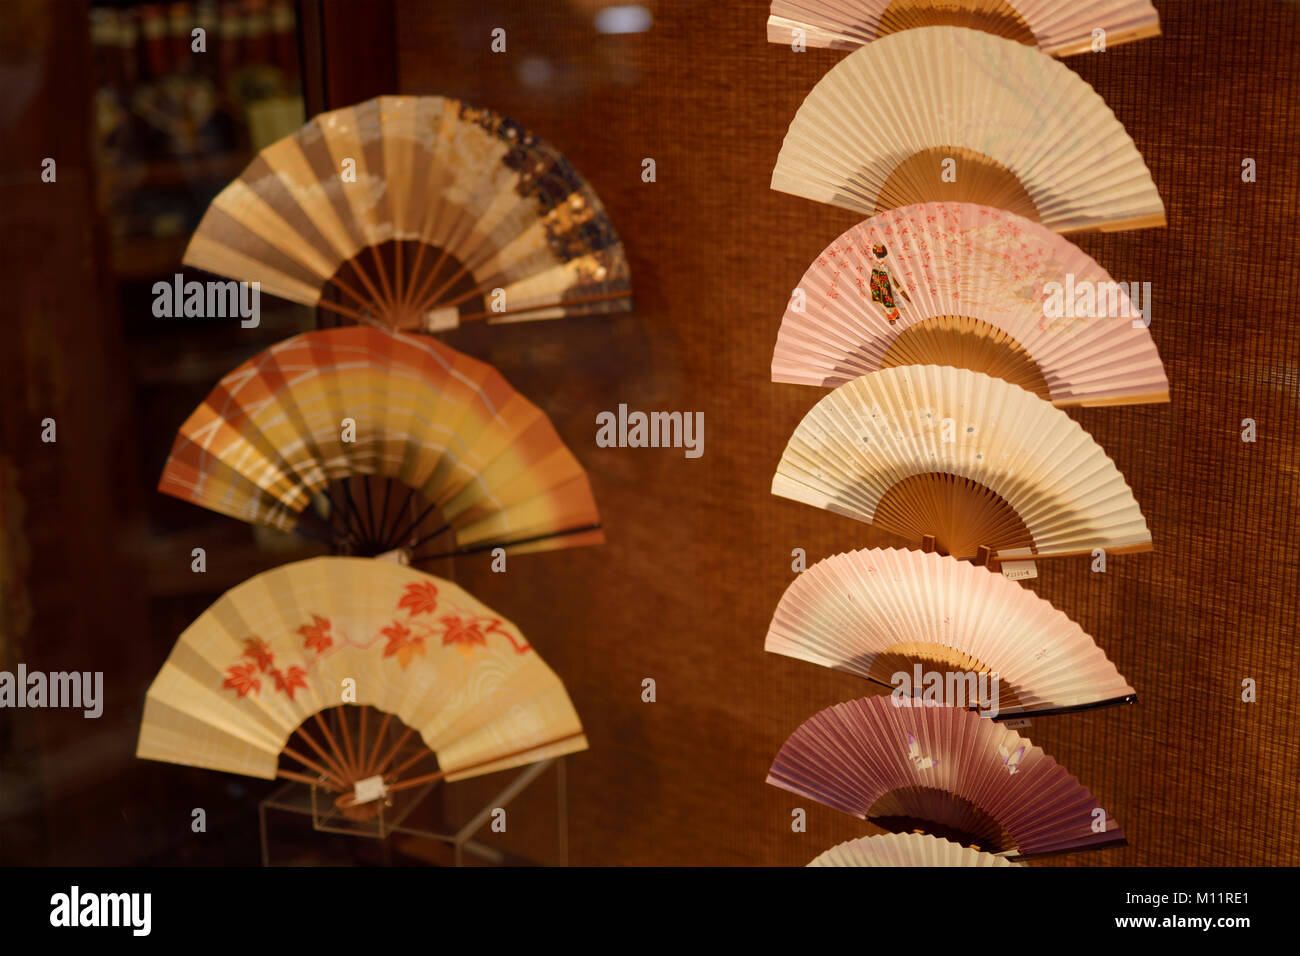 Souvenir fans hi-res stock photography and images - Alamy